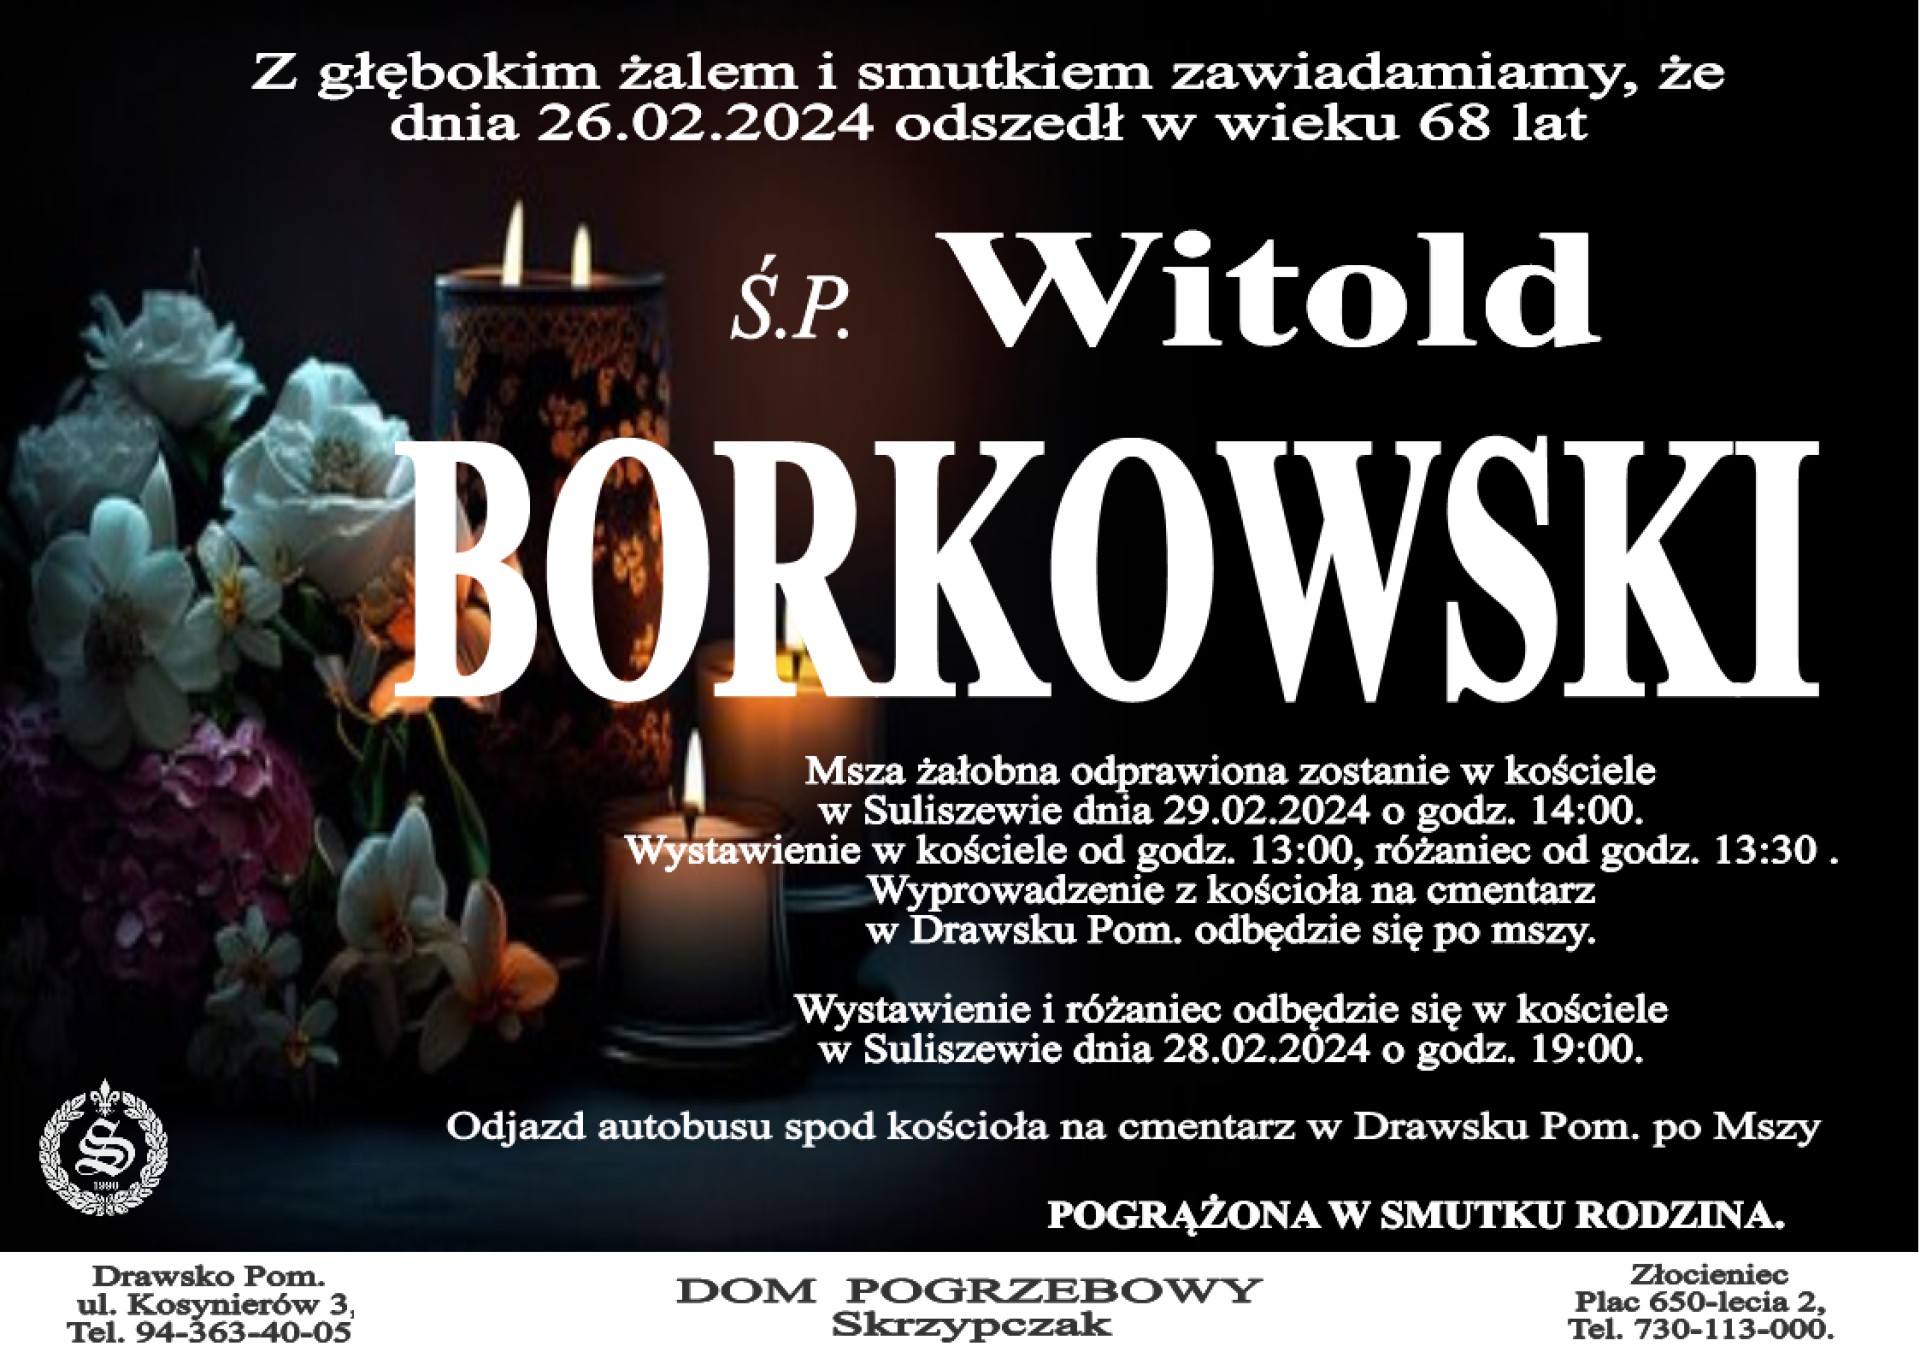 Ś.P. Witold Borkowski